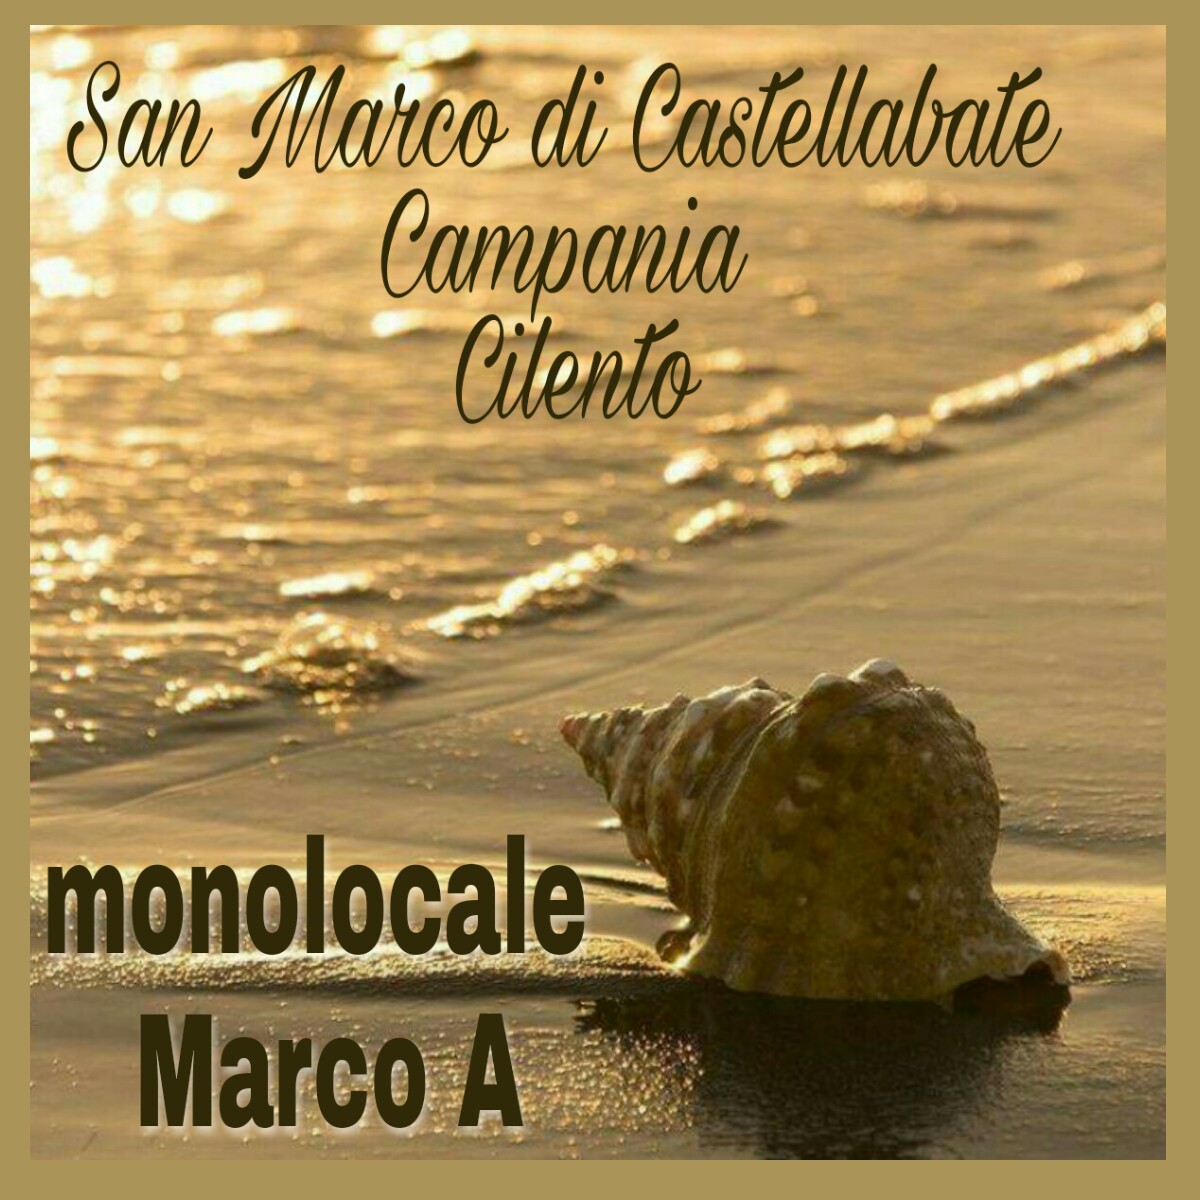 Monolocale Marco A